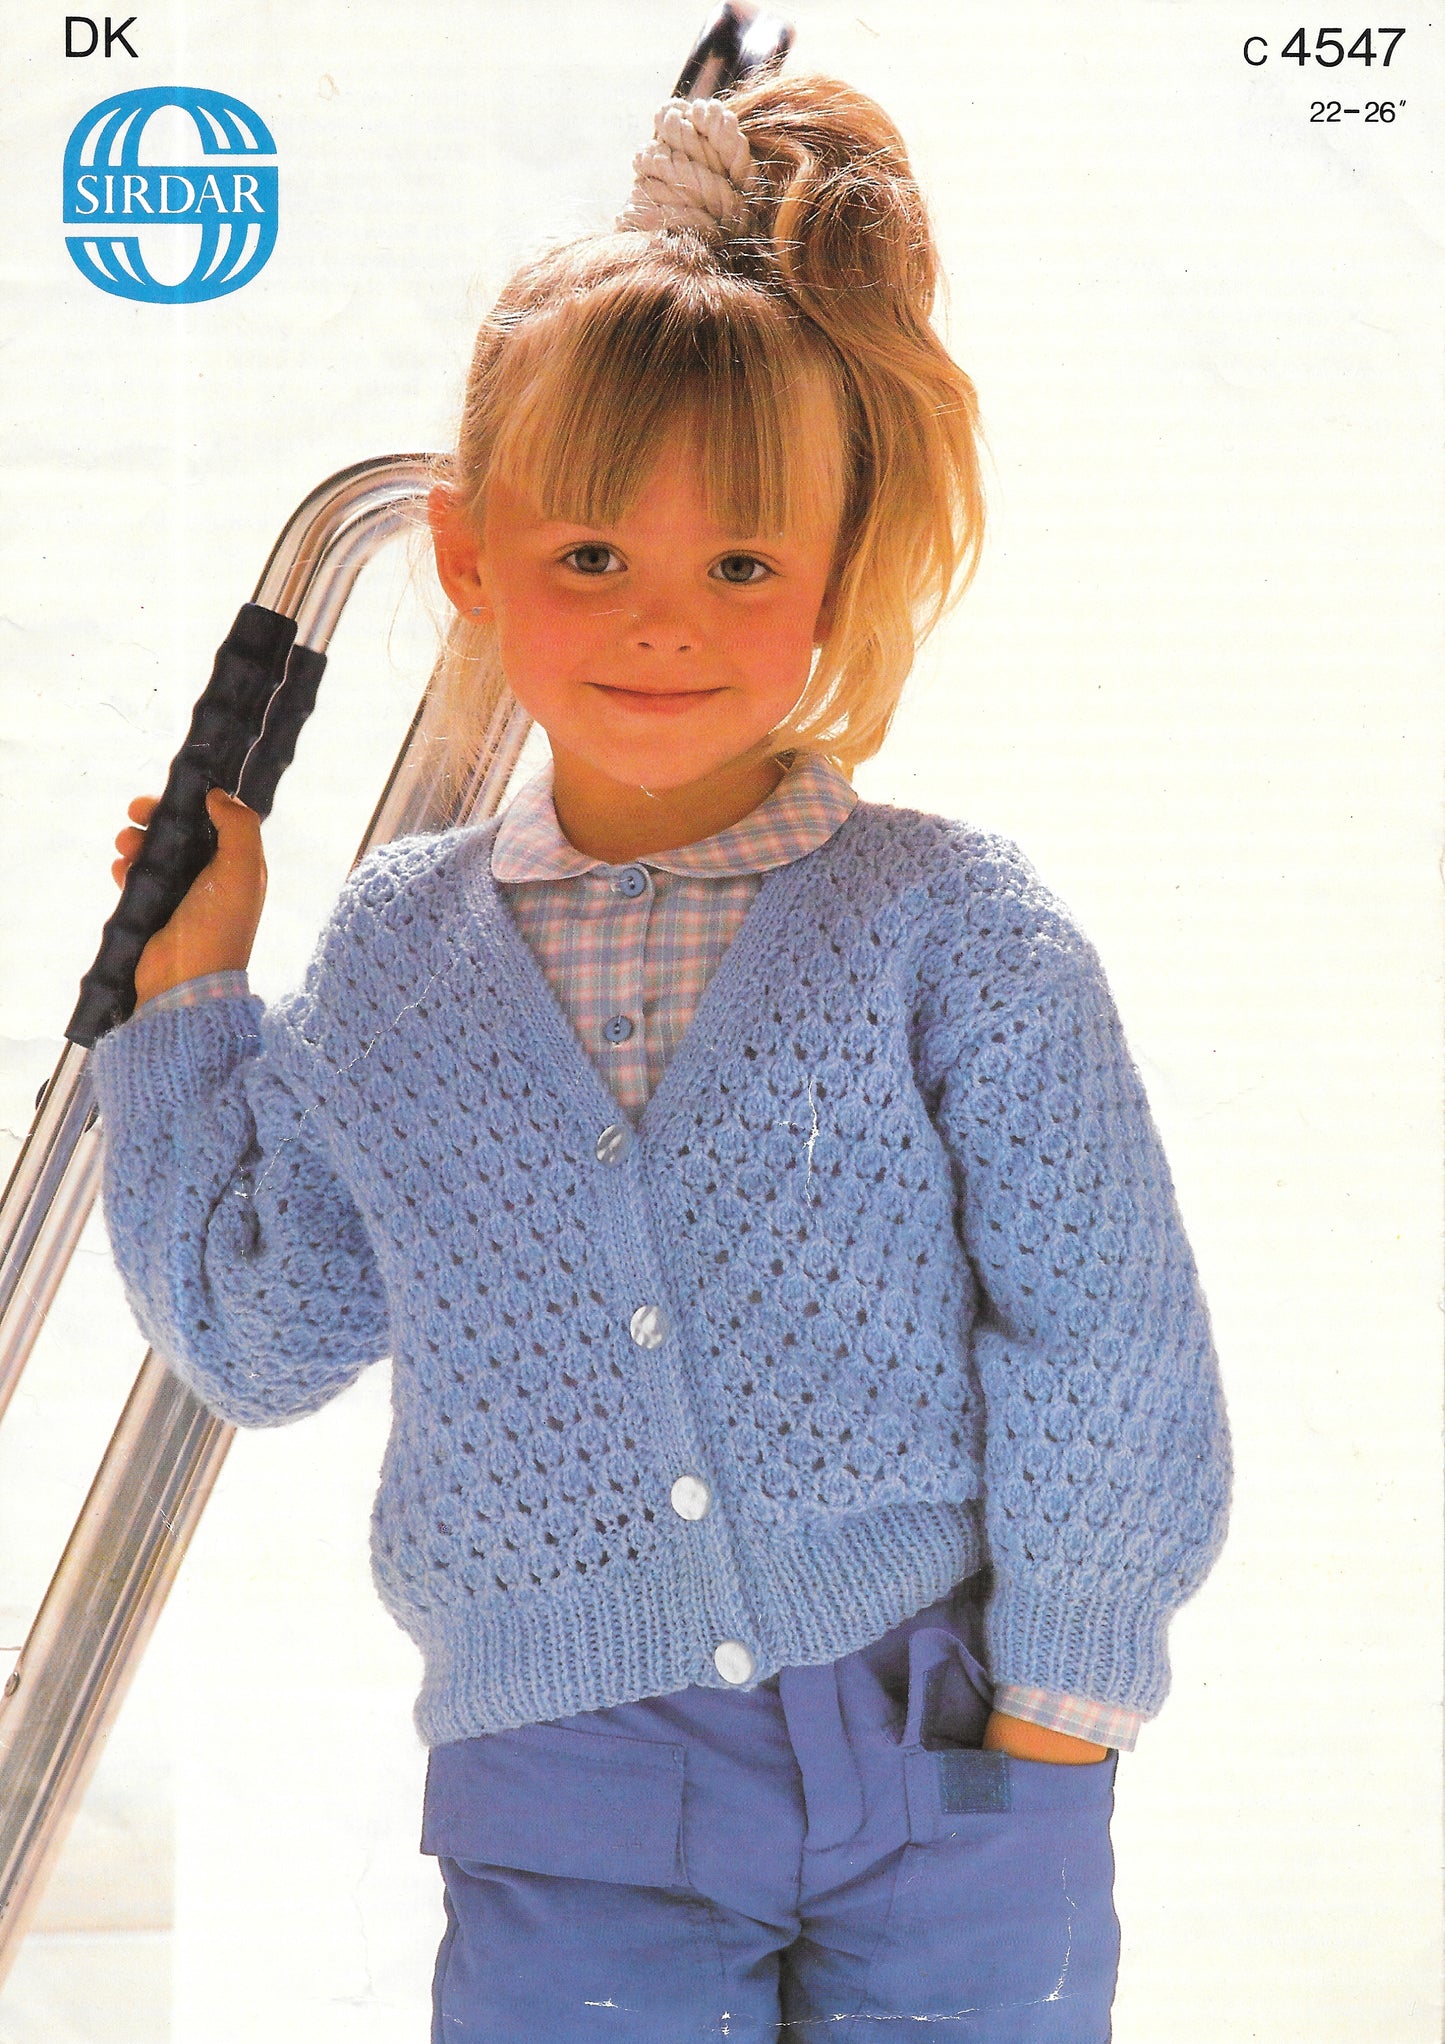 C4547 PRELOVED Sirdar Knitting Pattern. Child's lacy cardigan.